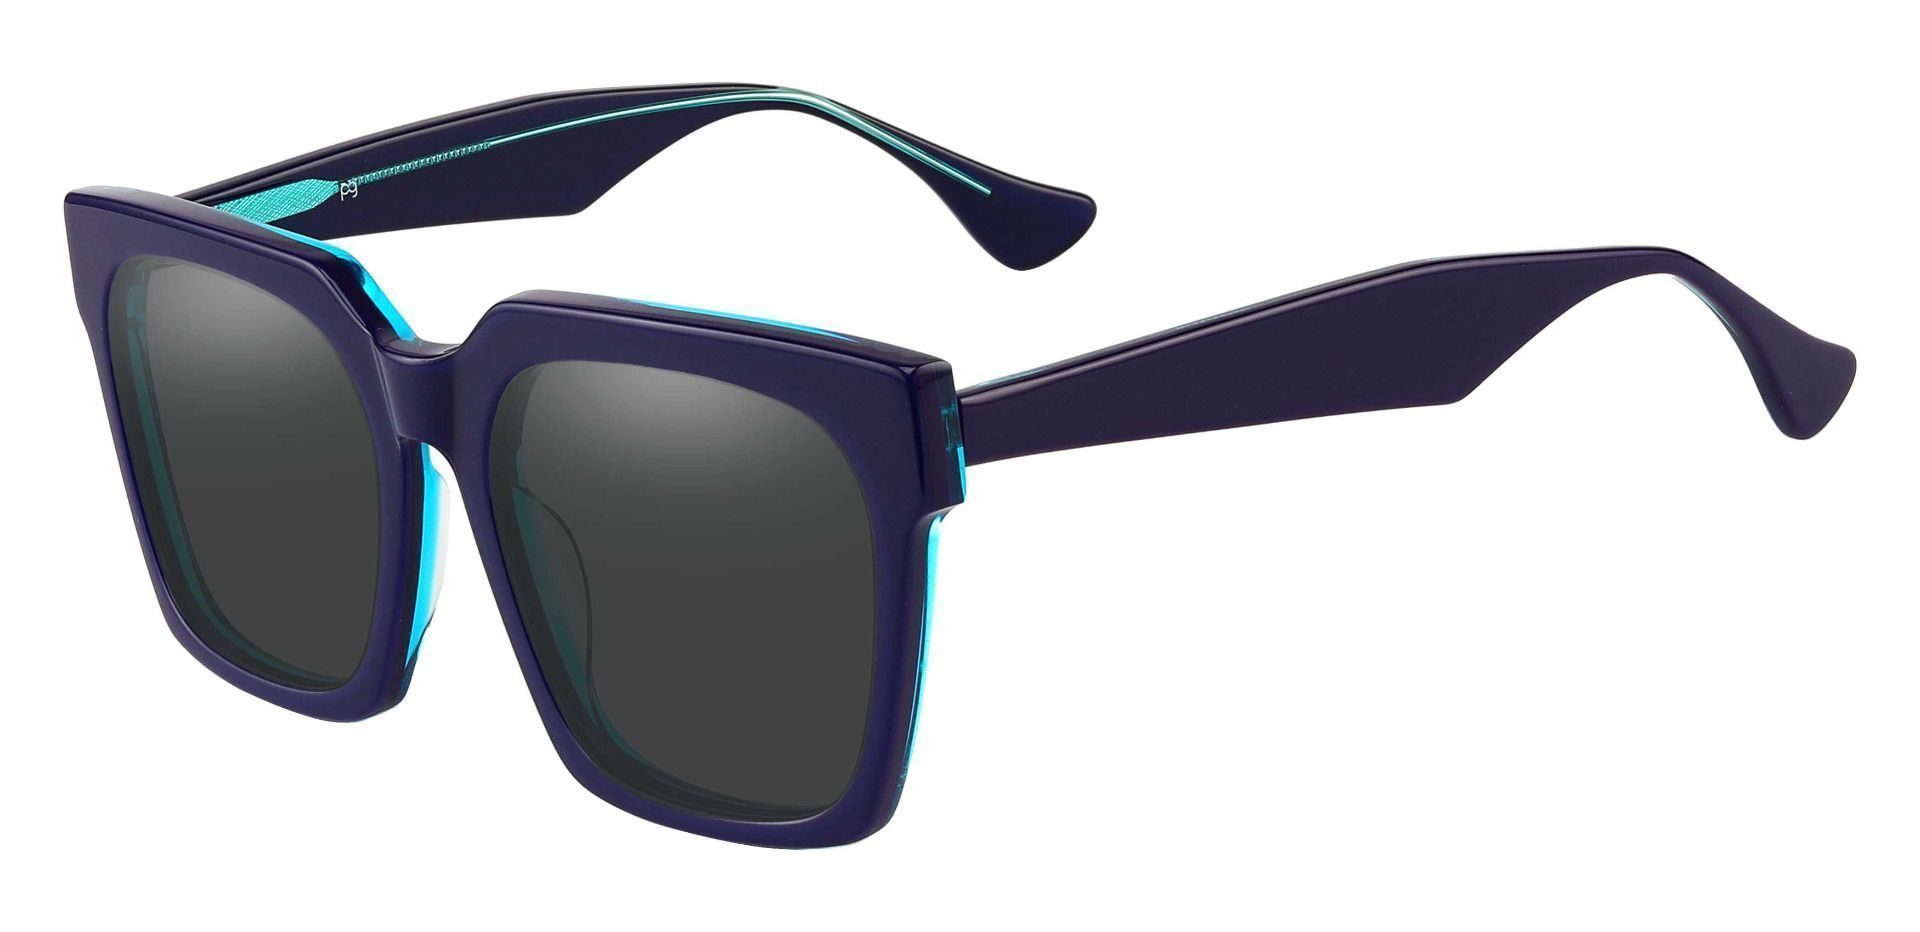 Harlan Square Progressive Sunglasses - Blue Frame With Gray Lenses